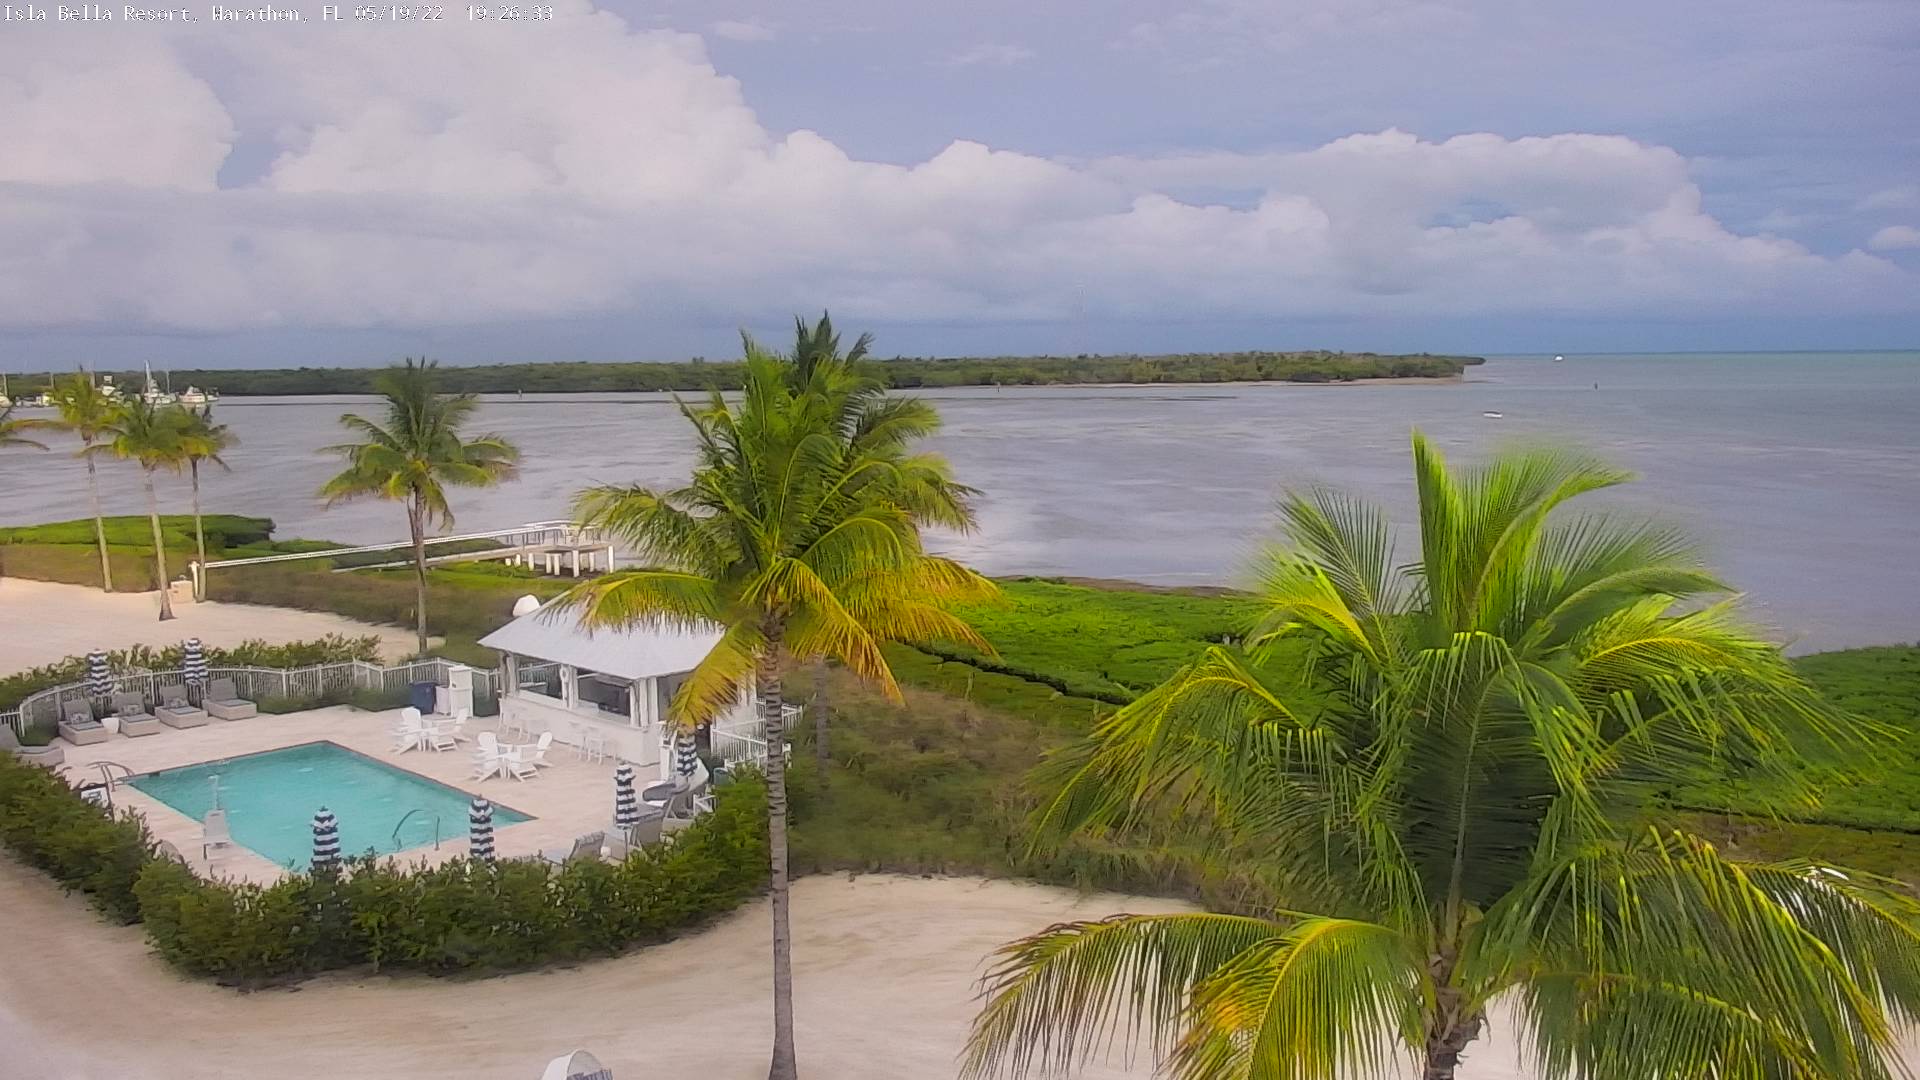 Isla Bella Beach Resort: Resort Cam - Florida Keys (fla-keys.com) - USA